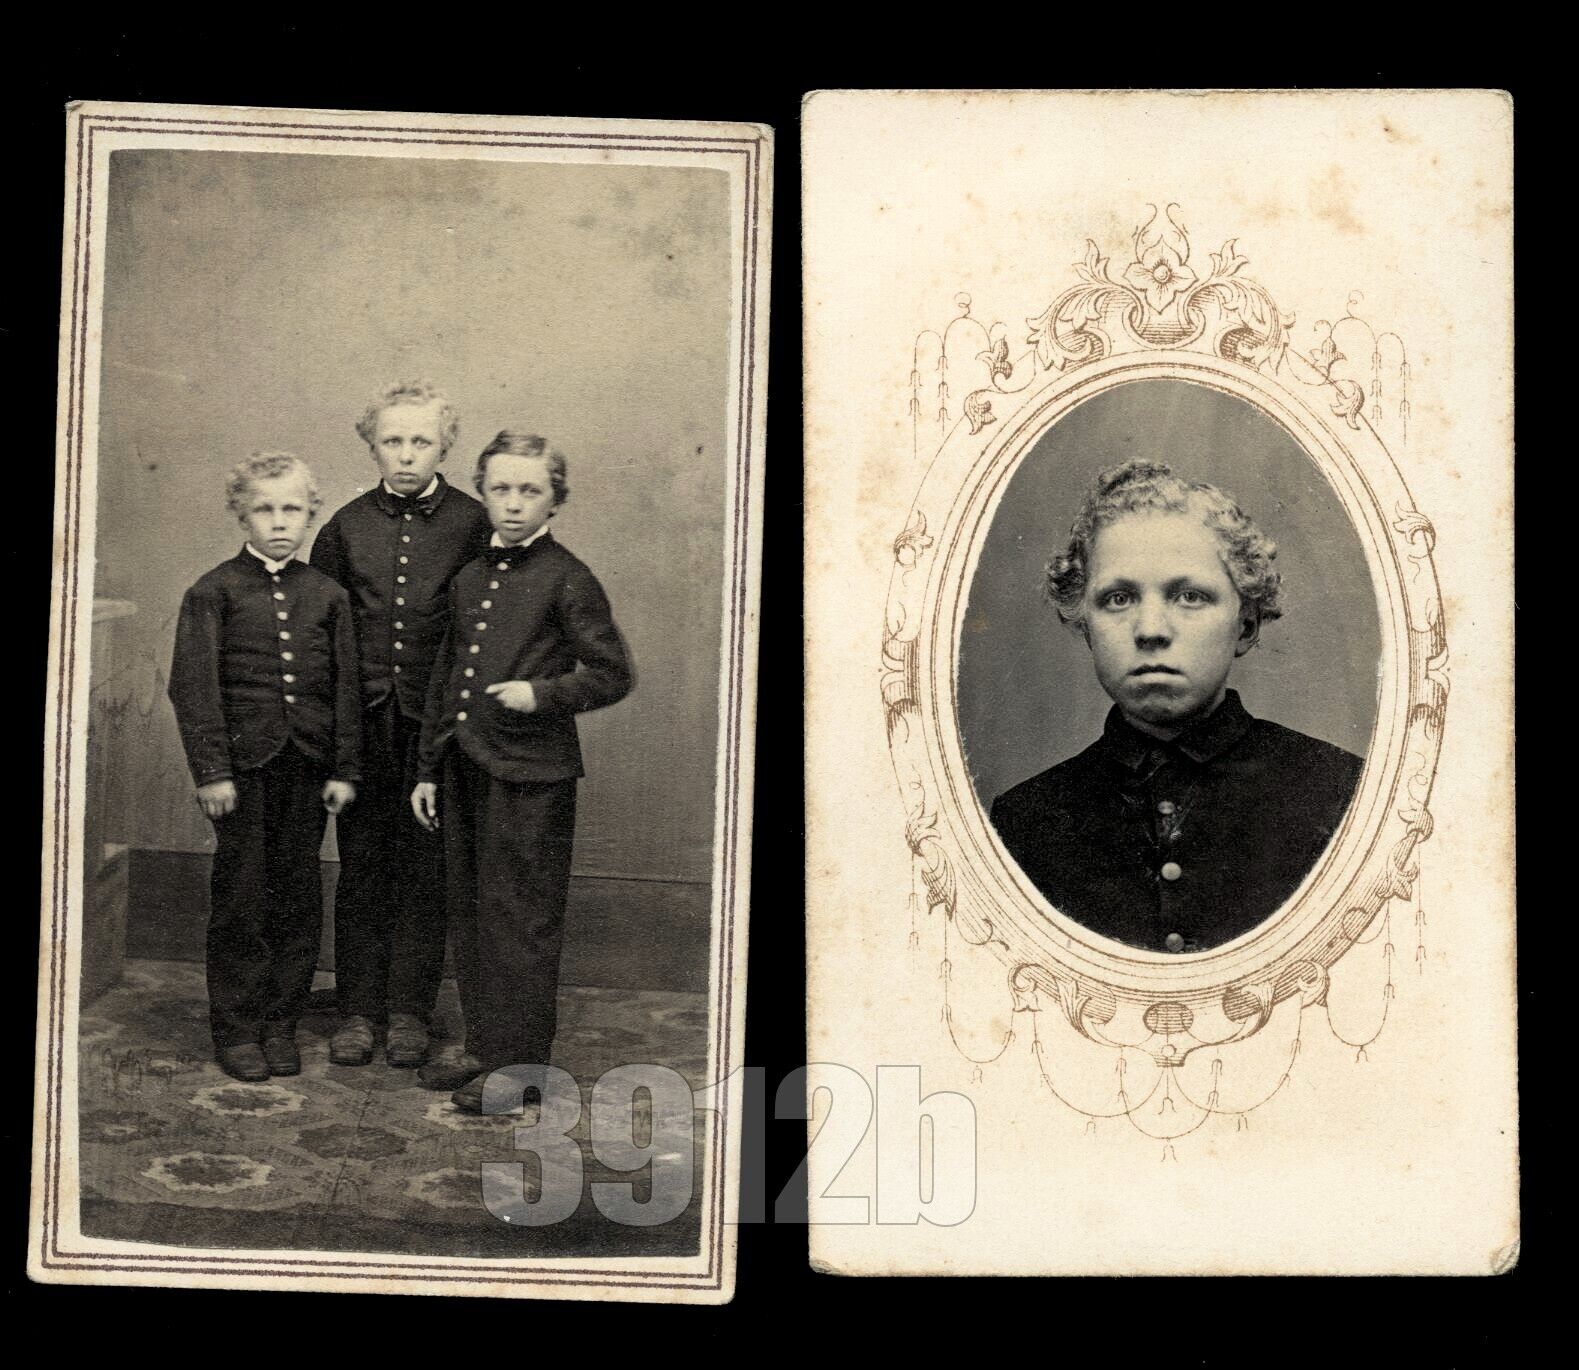 Lot of 2 Civil War Era / 1860s CDVs of Little Boys / Military Cadets in Uniform